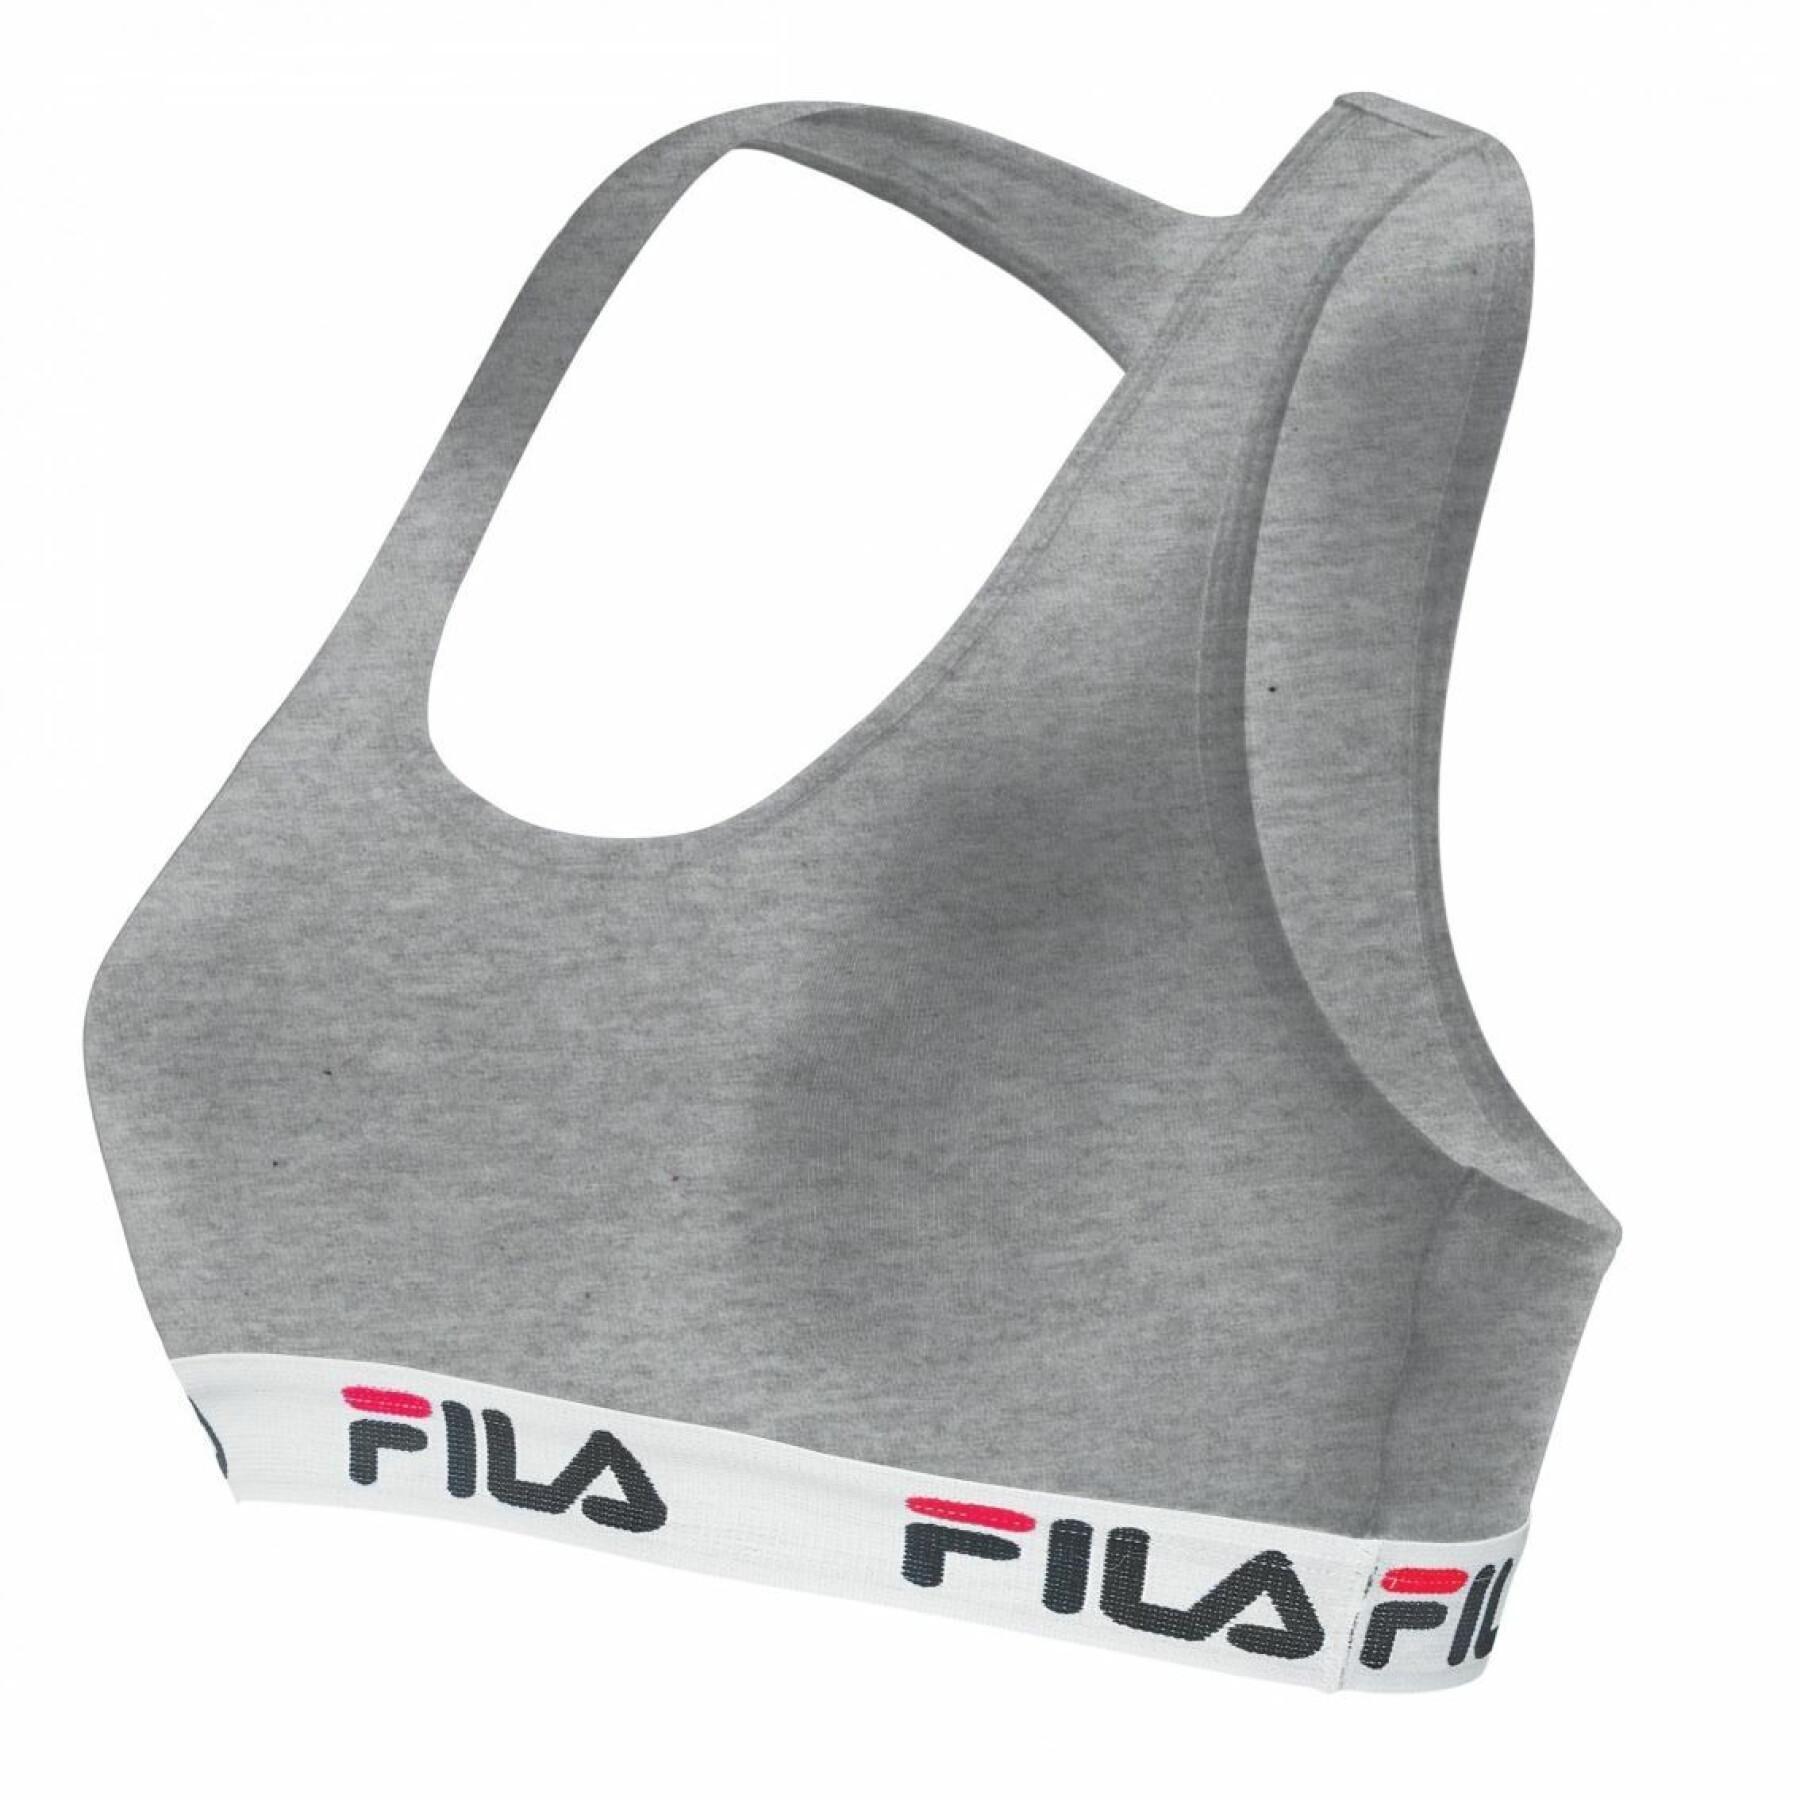 Women's cotton bra Fila - Brands - Lifestyle